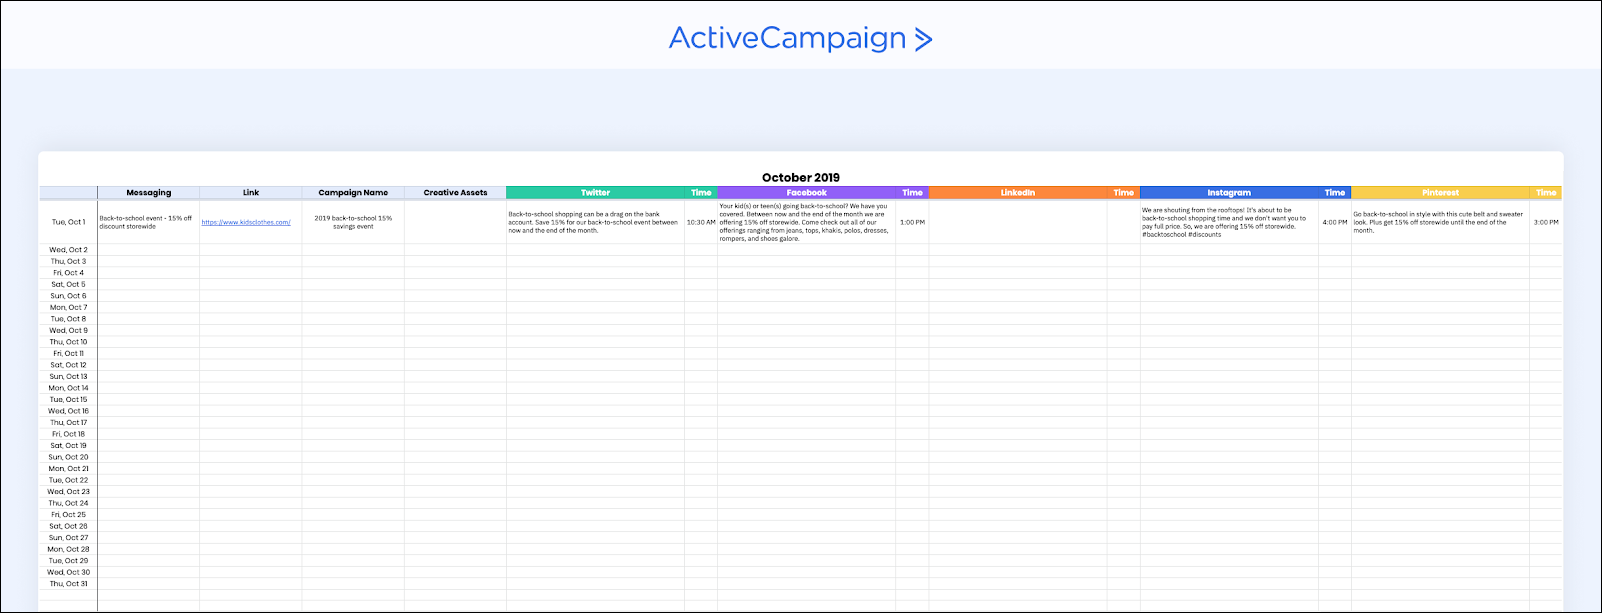 Activecampaign content calendar 